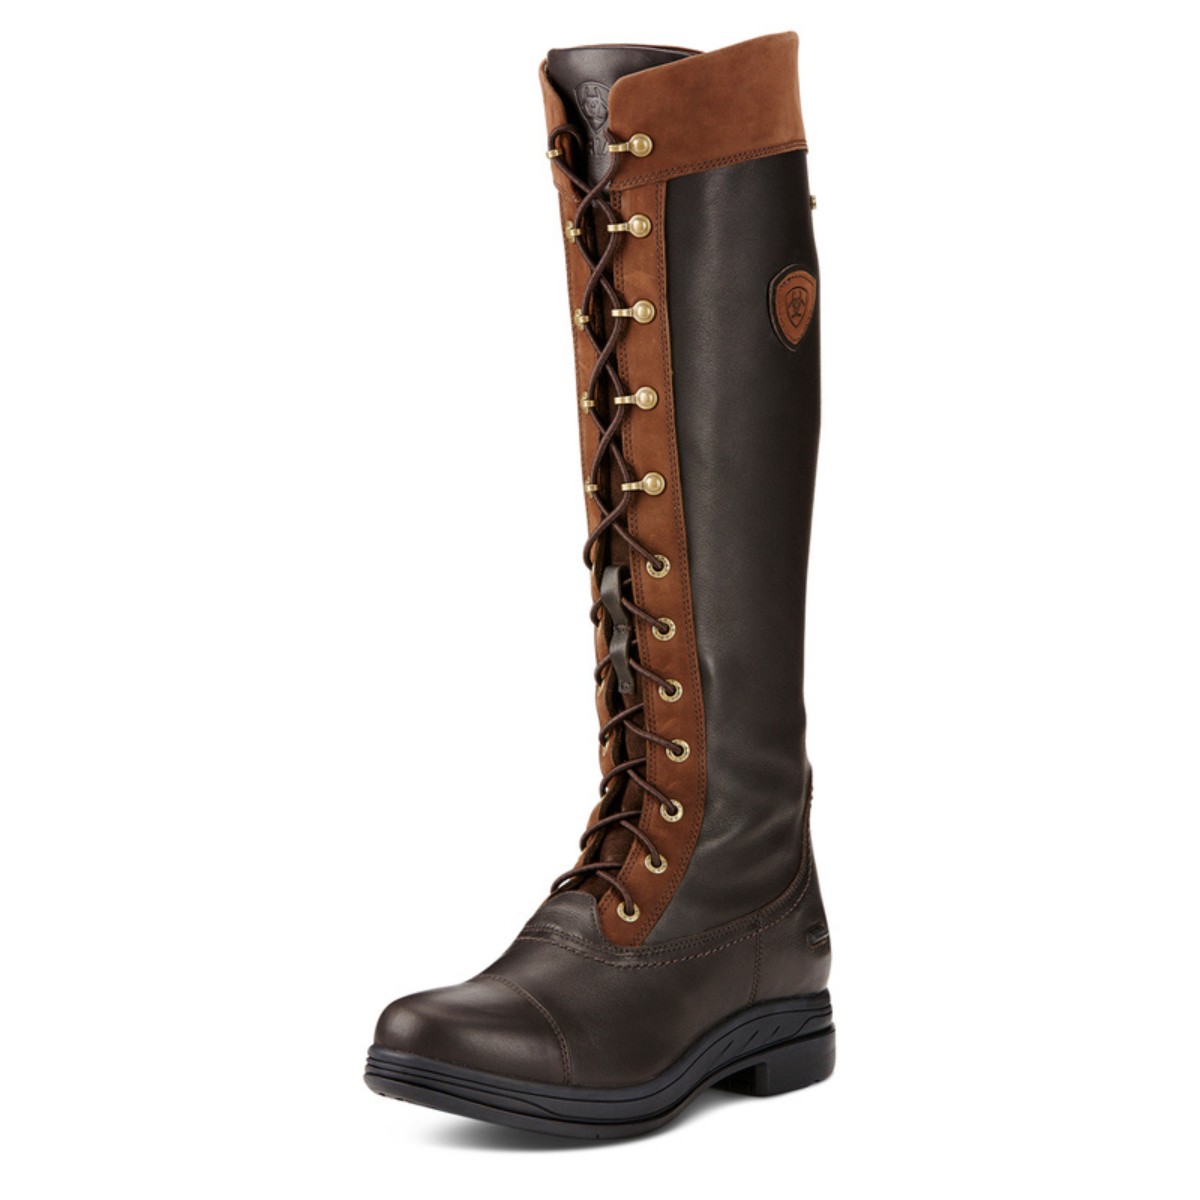 Ariat Women's Coniston Pro GTX Insulated Boots Ebony - Wychanger Barton